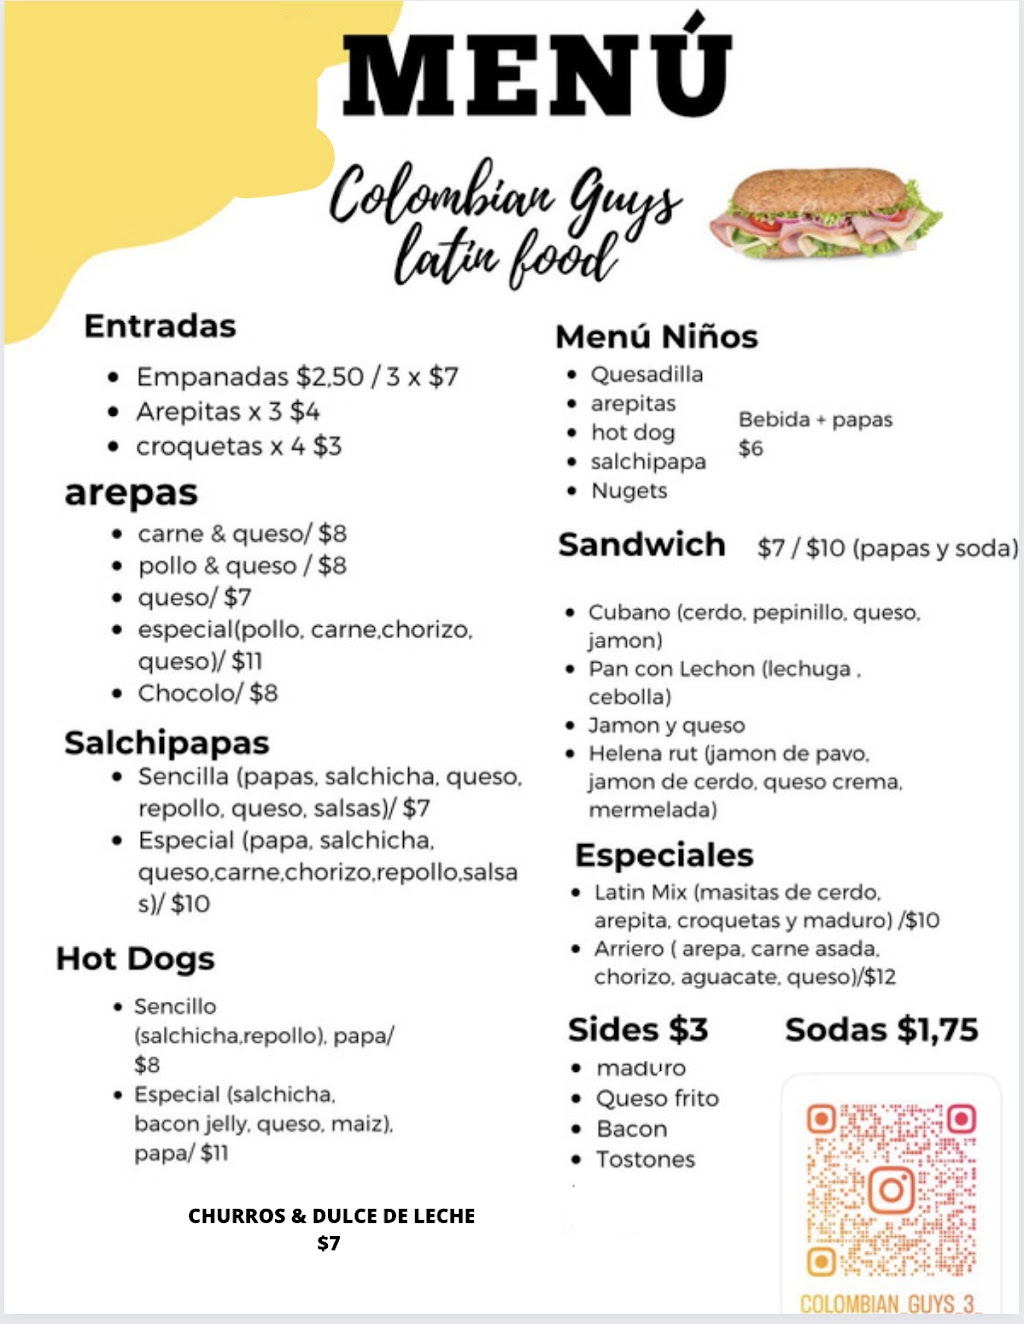 Colombian guys latin food | 2625 US Hwy 98 N, Lakeland, FL 33805, USA | Phone: (786) 865-3917